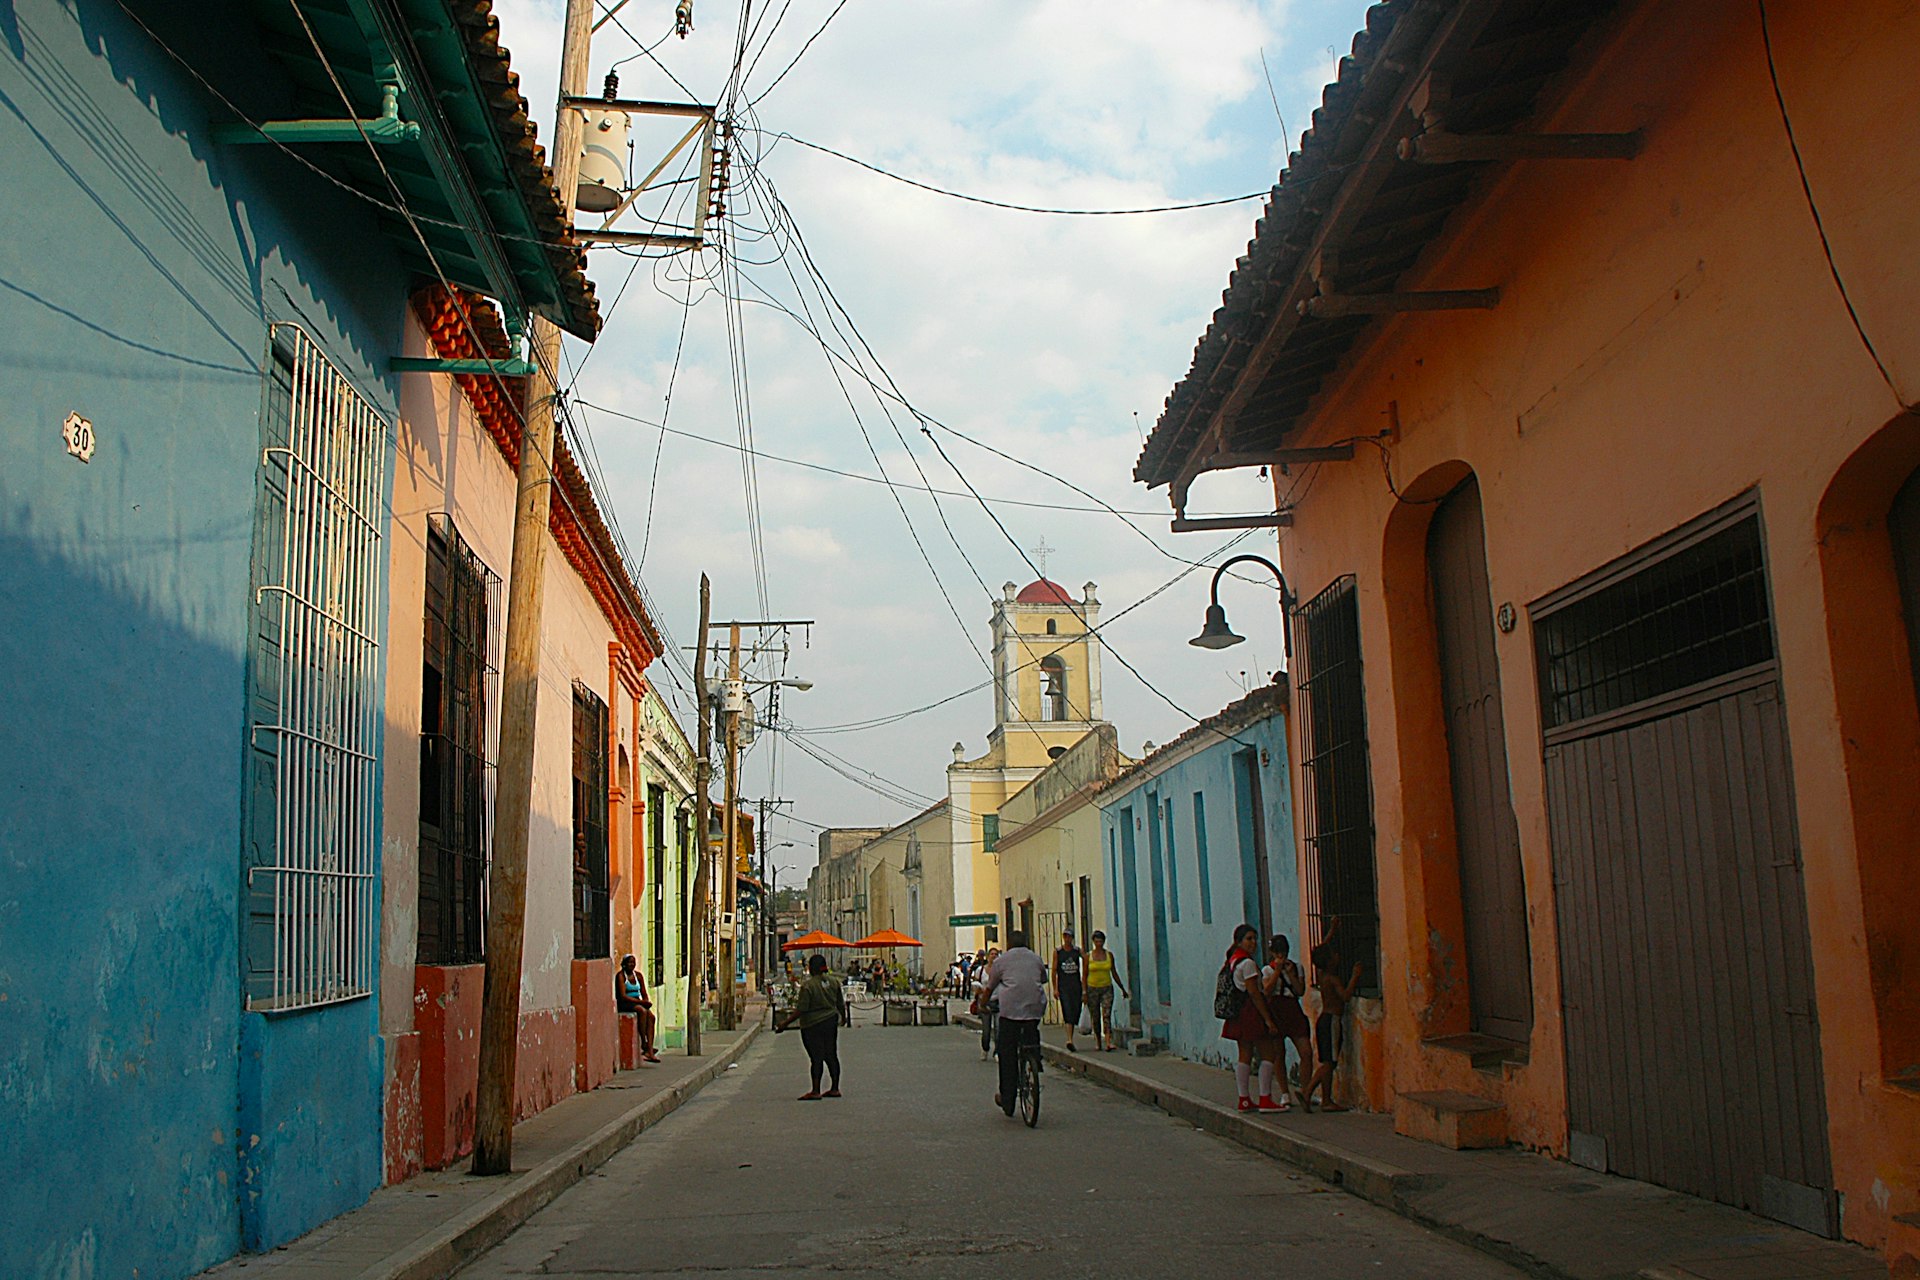 Street scene in Camagüey, Cuba